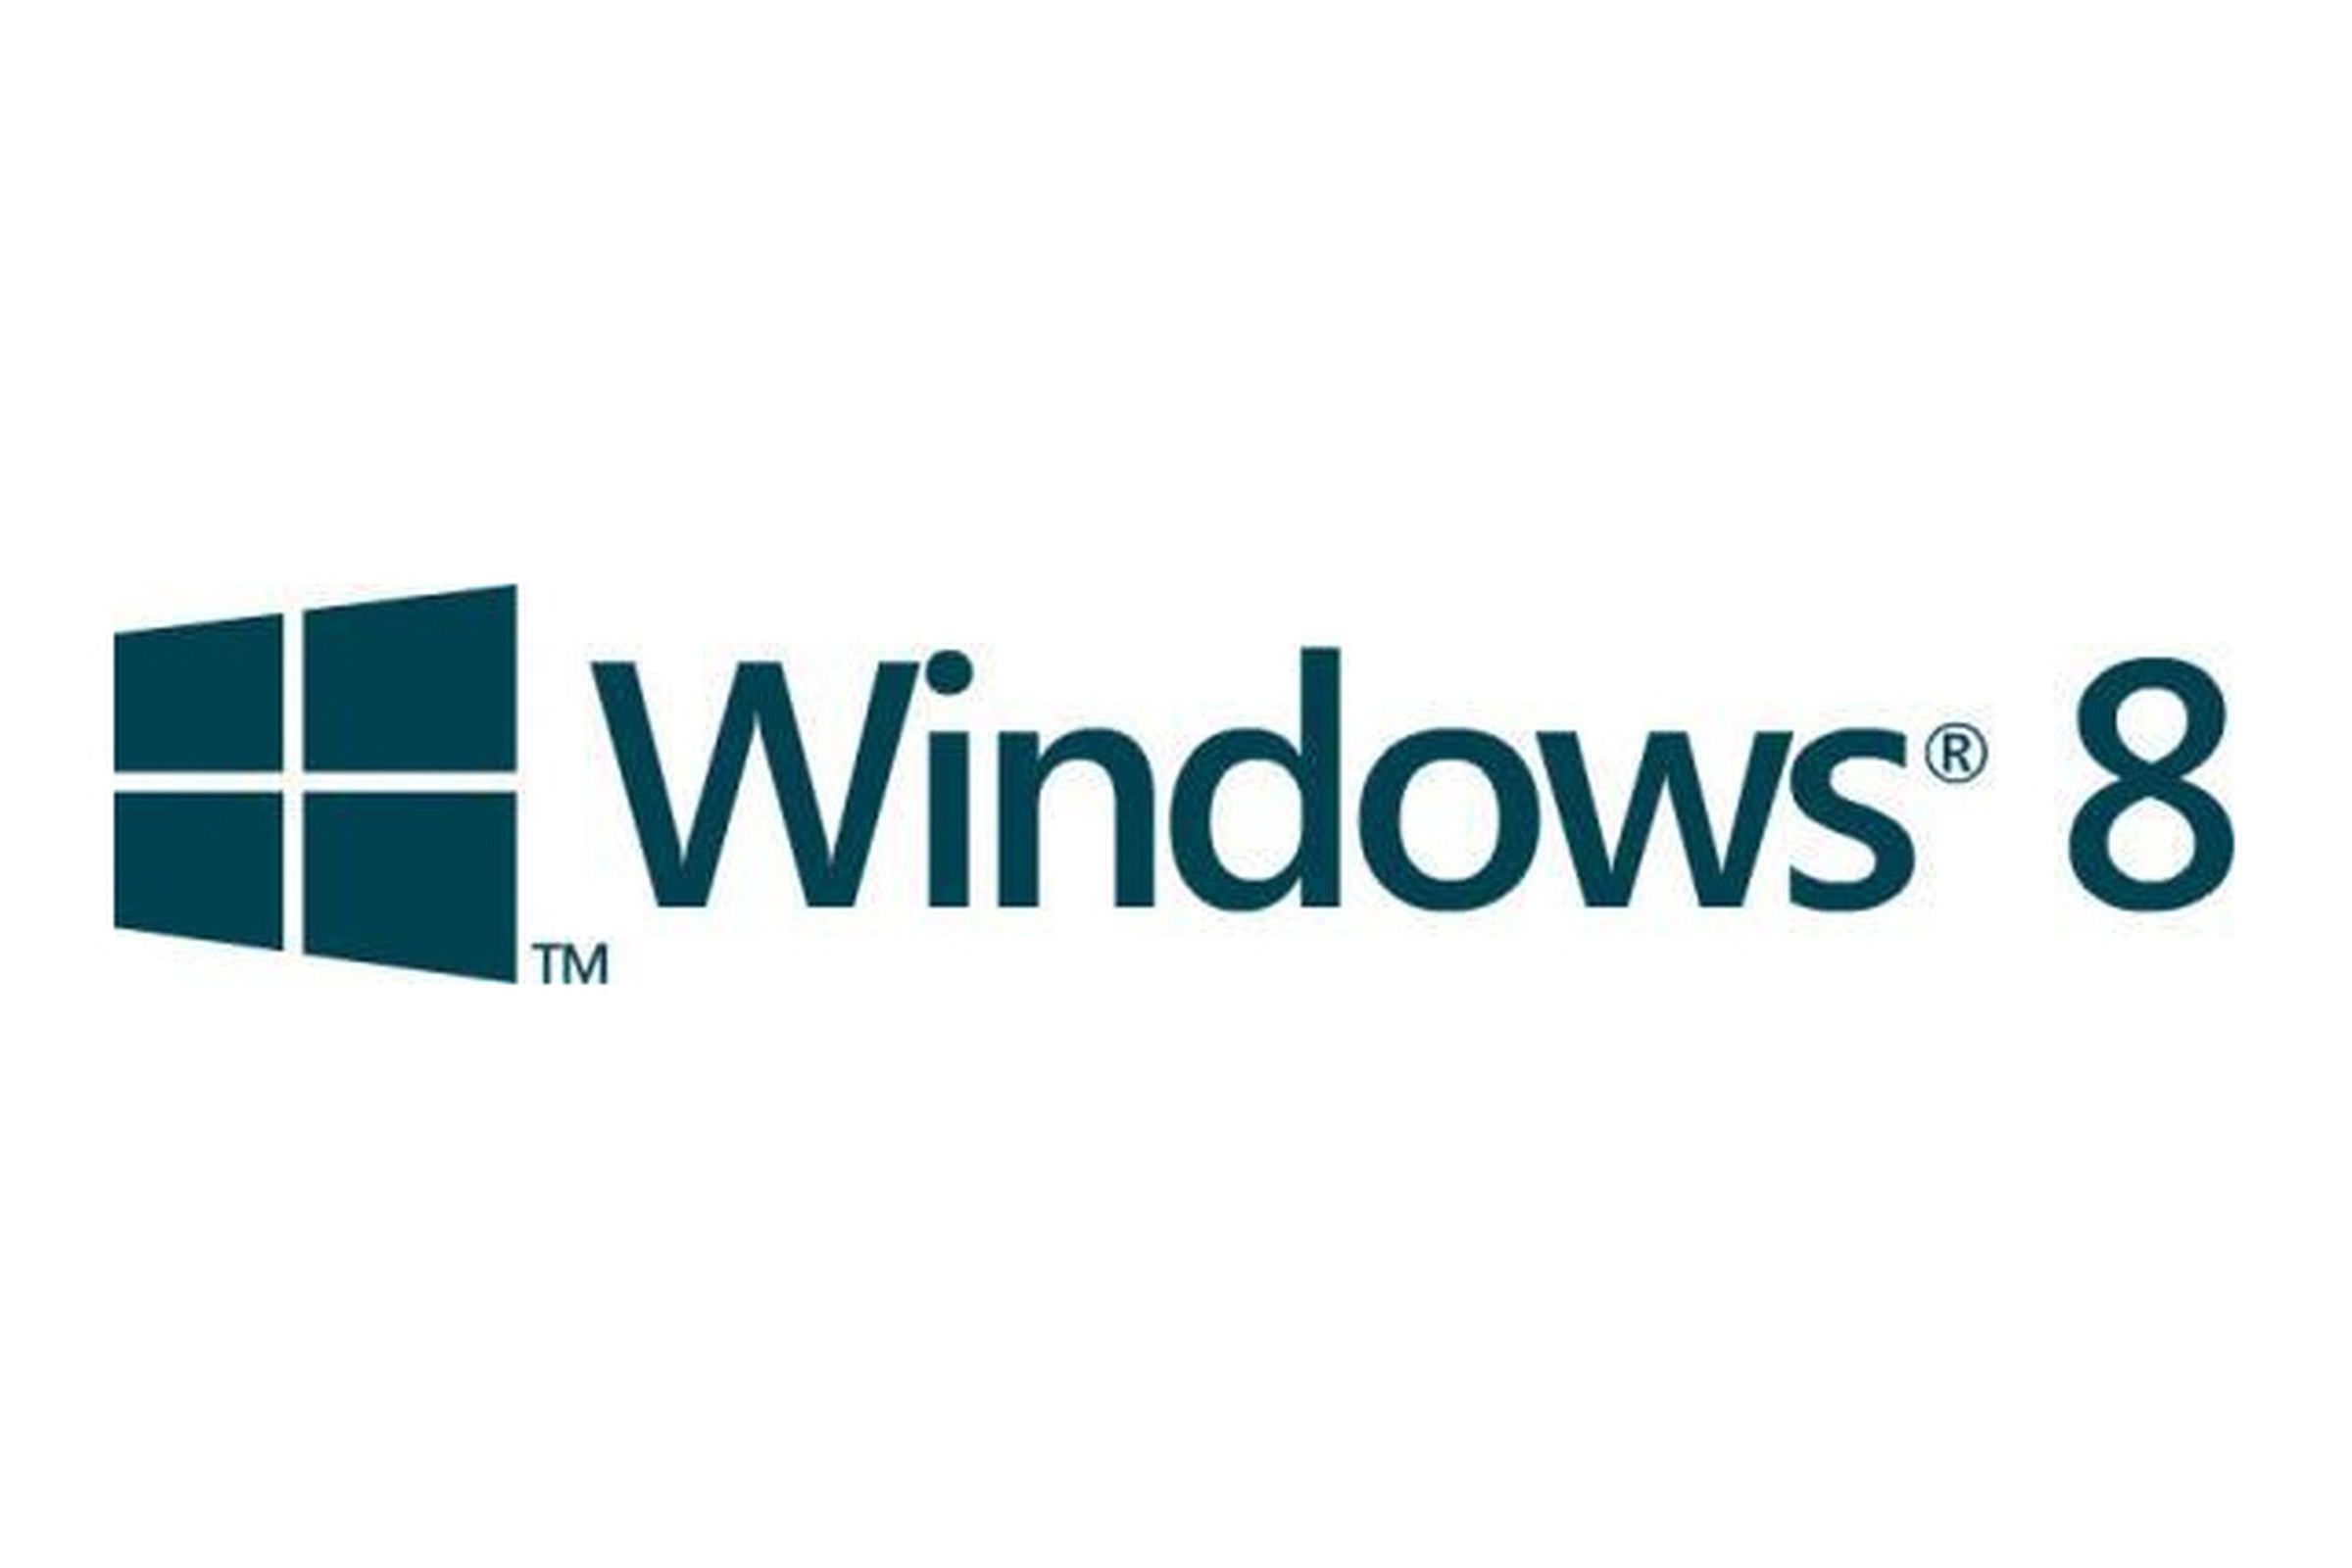 Windows 8 flag